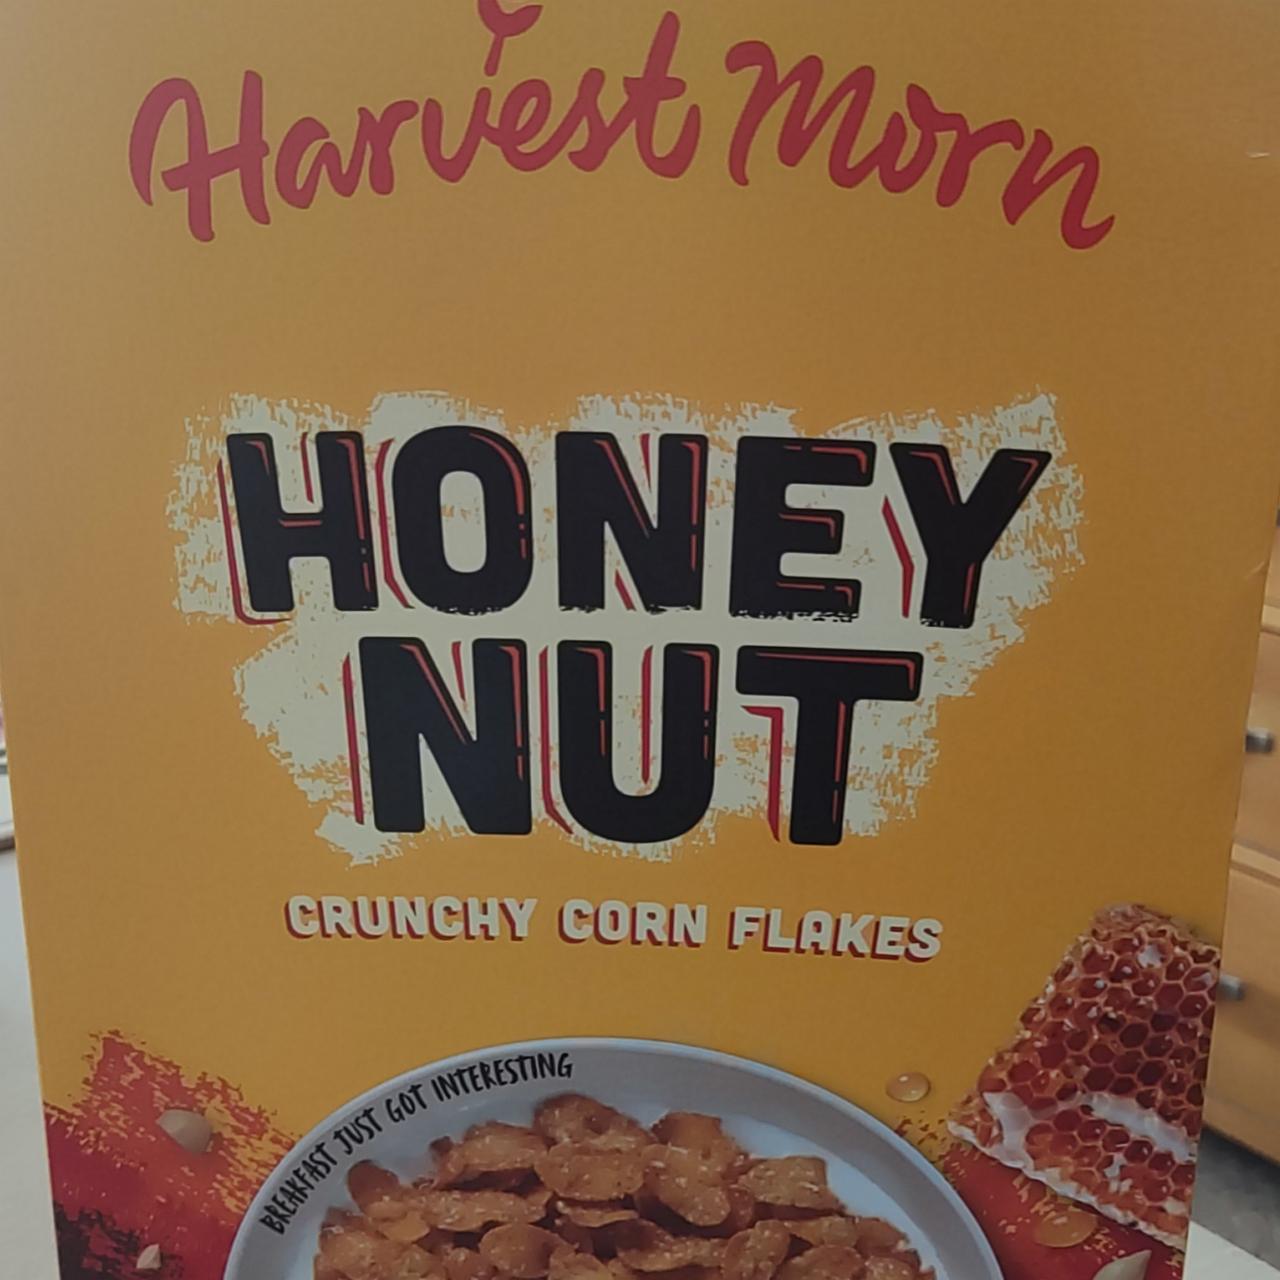 Fotografie - Honey Nut Crunchy Corn Flakes Harvest Morn